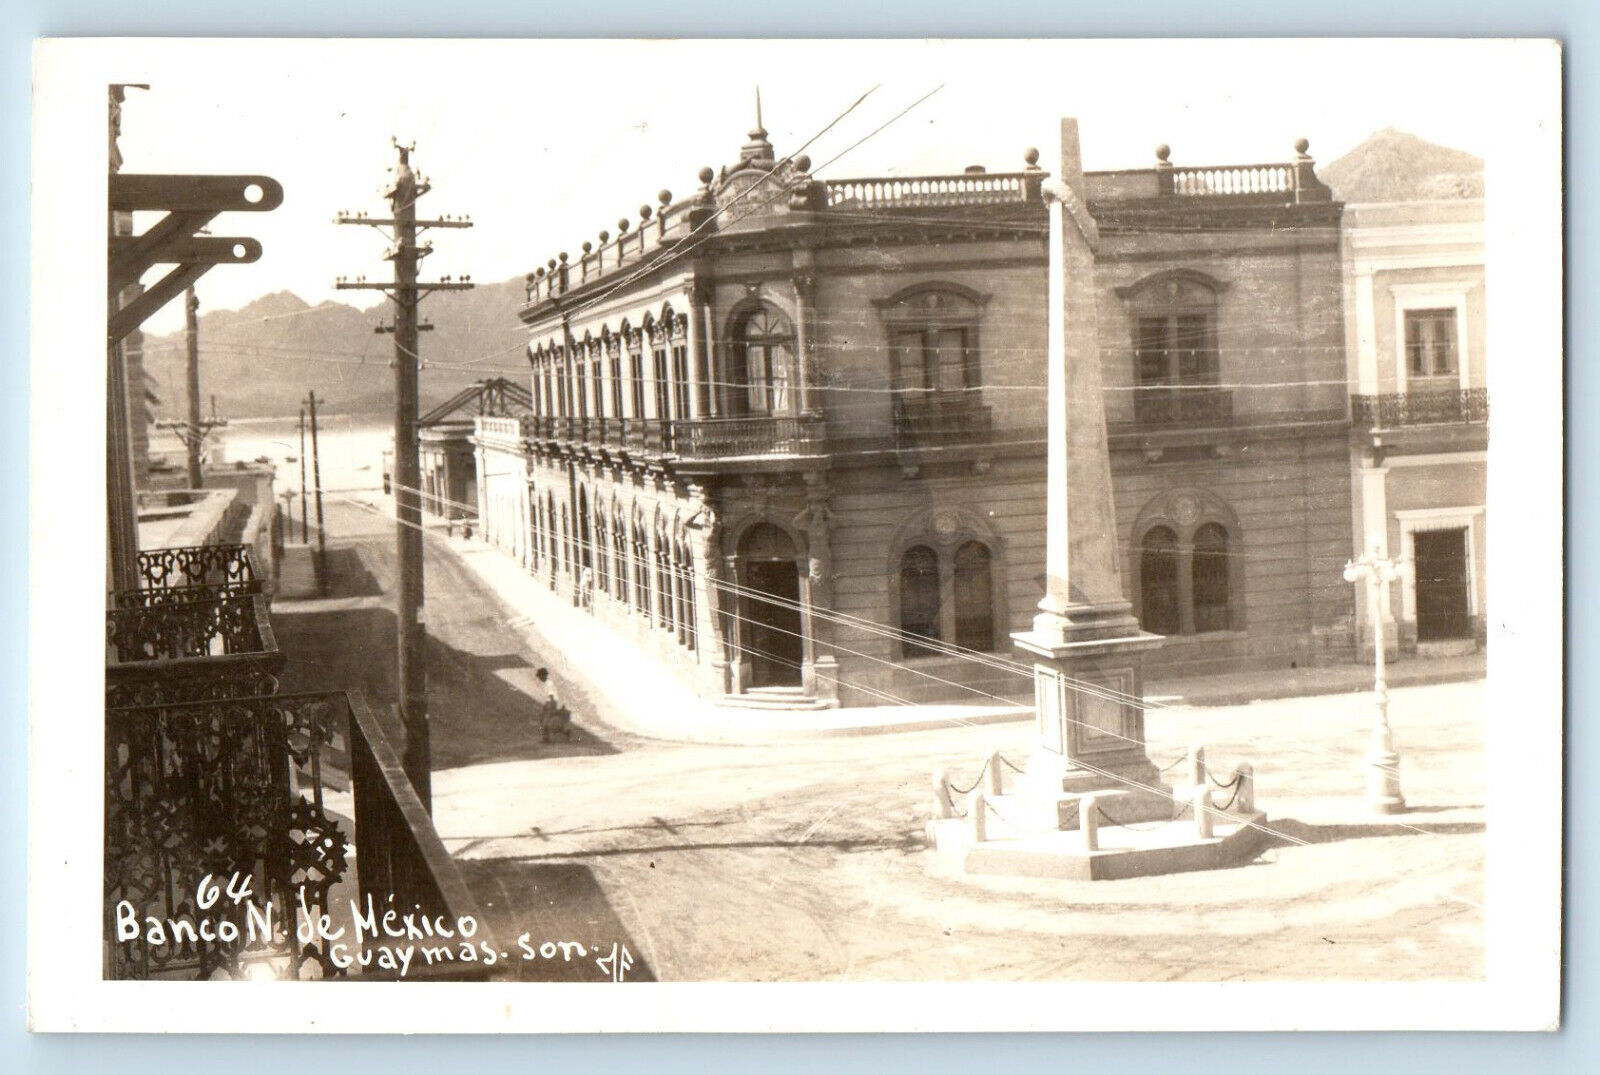 Guaymas Sonora Mexico Postcard Banco N. de Mexico c1930's Unposted RPPC Photo